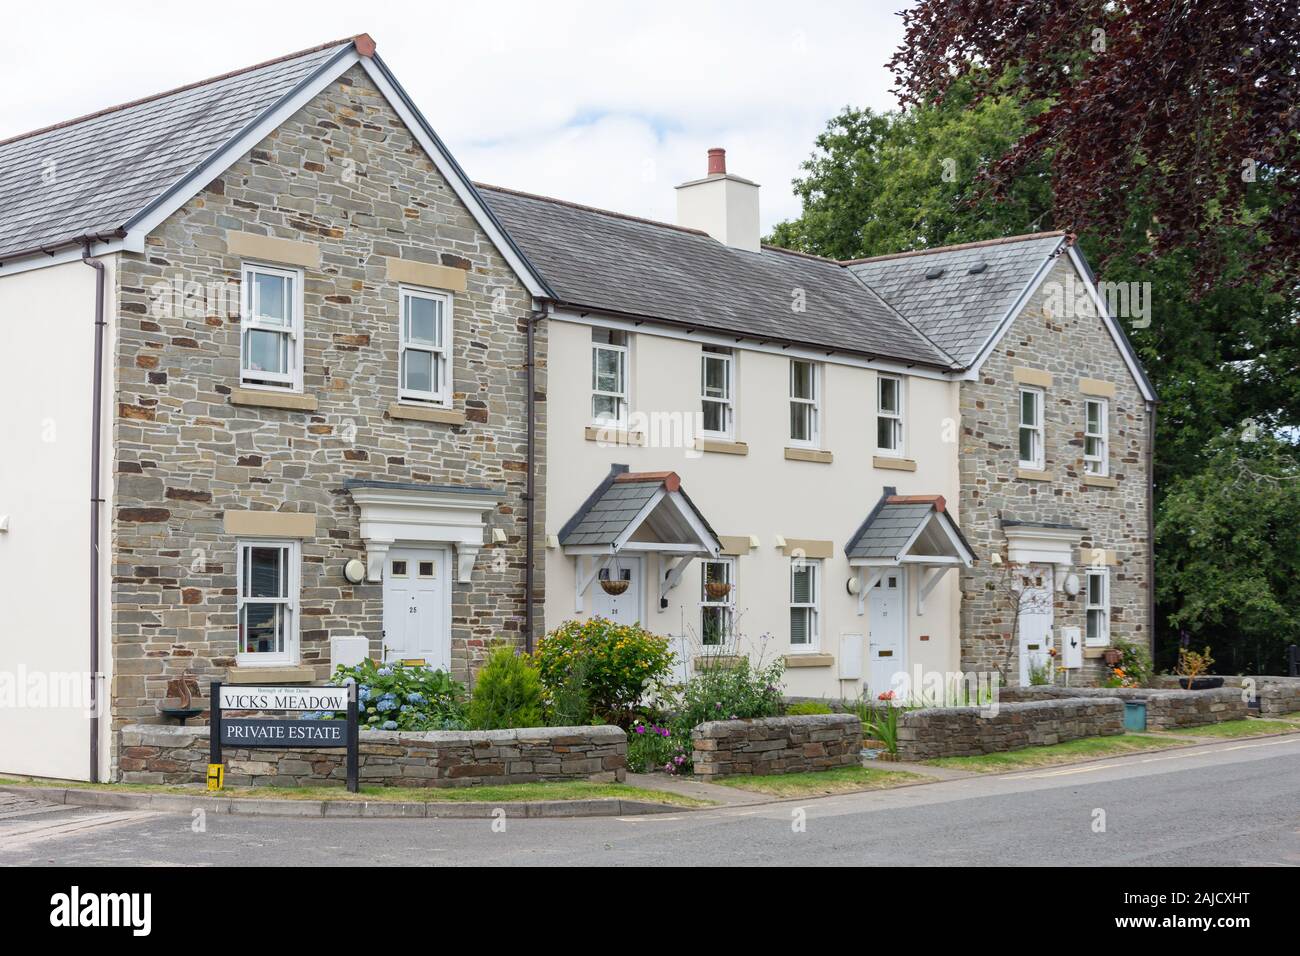 Private housing estate, Vicks Meadow, Hatherleigh, Devon, England, United Kingdom Stock Photo